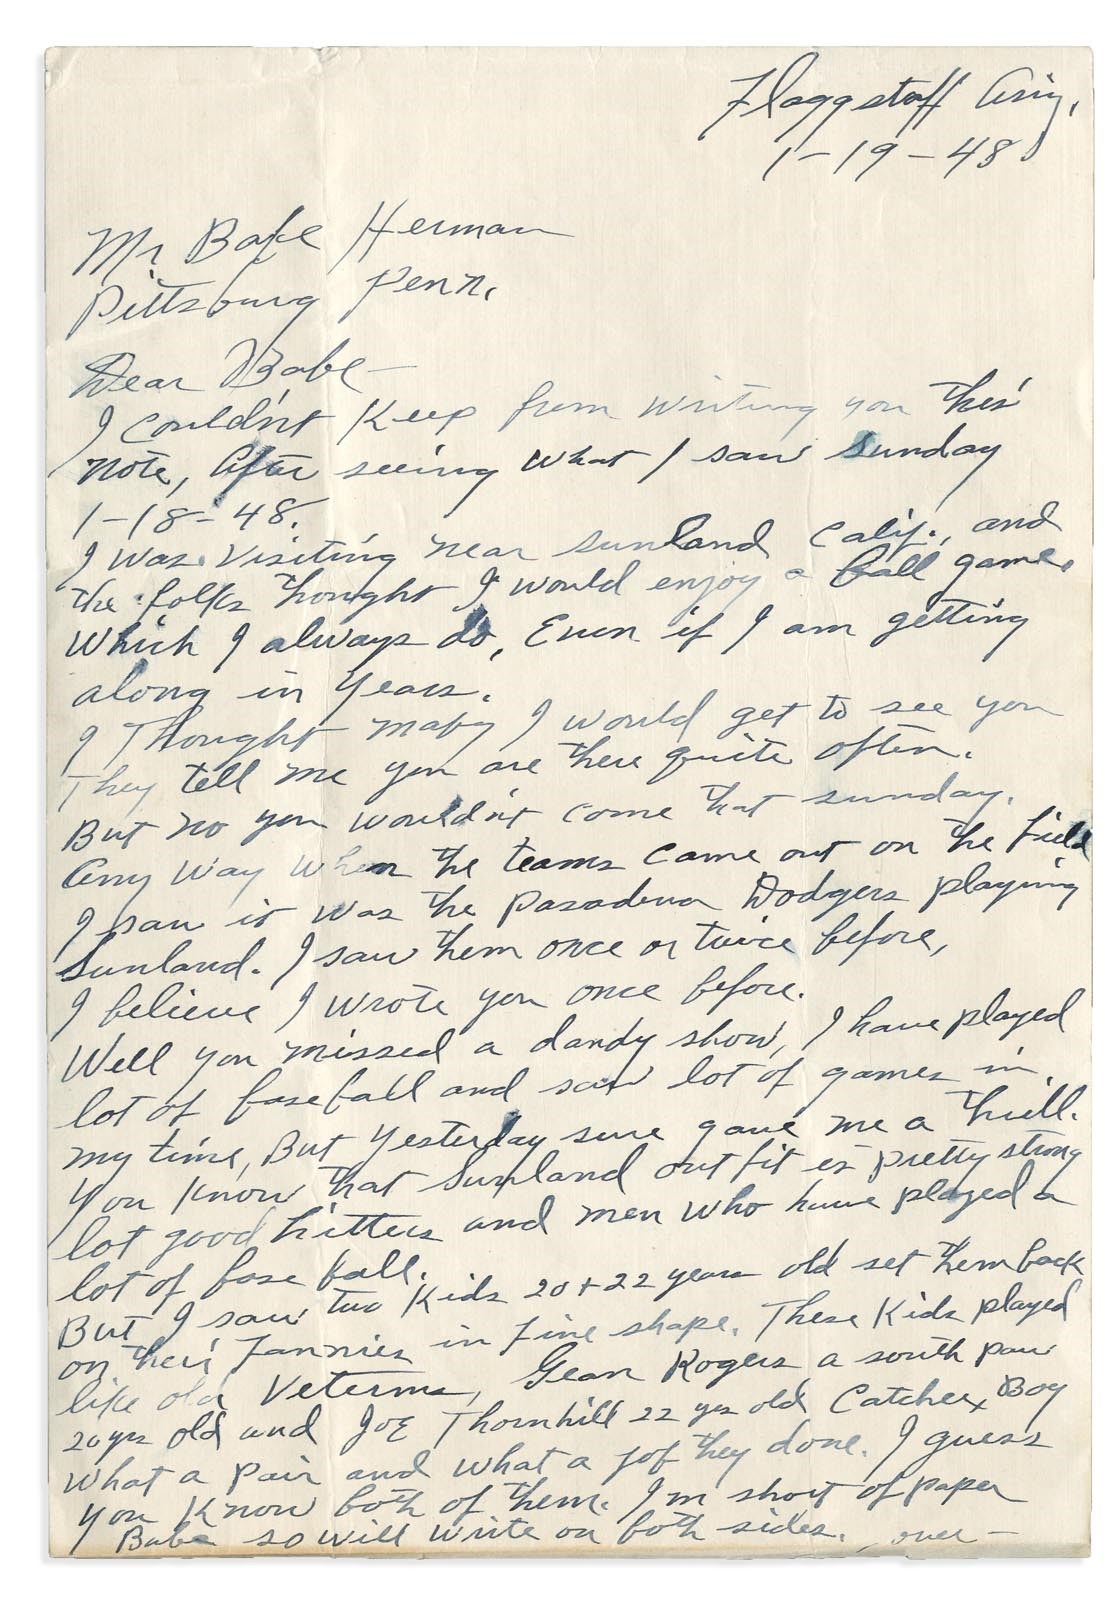 Negro League, Latin, Japanese & International Base - 1948 Alex Pompez Handwritten Letter to Babe Herman (PSA)